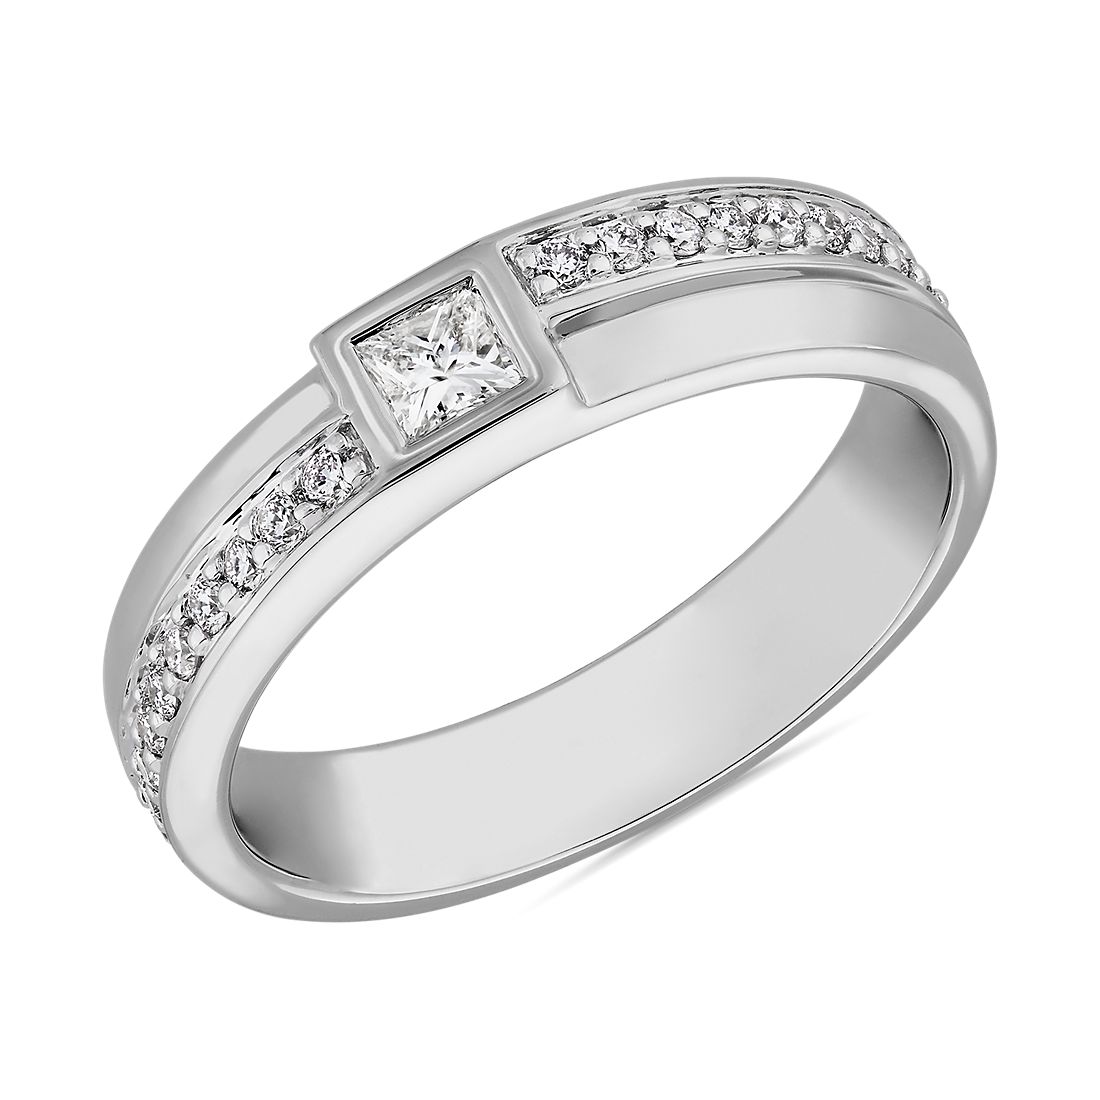 ZAC ZAC POSEN Bezel Set Princess Cut Diamond Ring in 14k White Gold (4 mm, 1/3 ct. tw.)